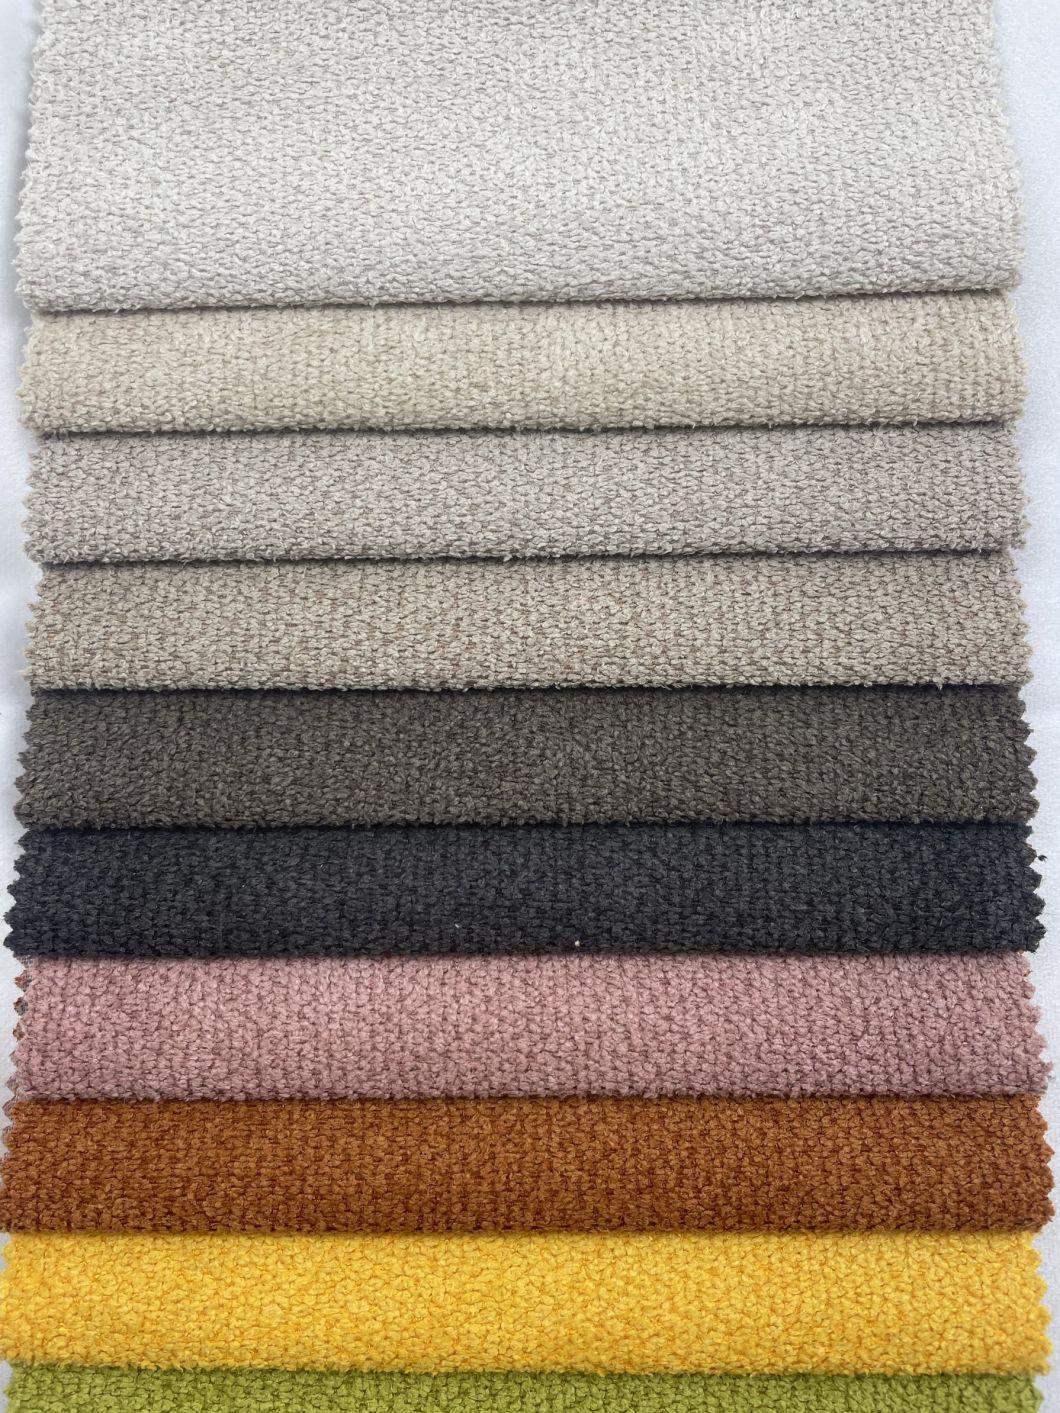 Sofa Fabric Woven Fabric Types of Sofa Material Fabric